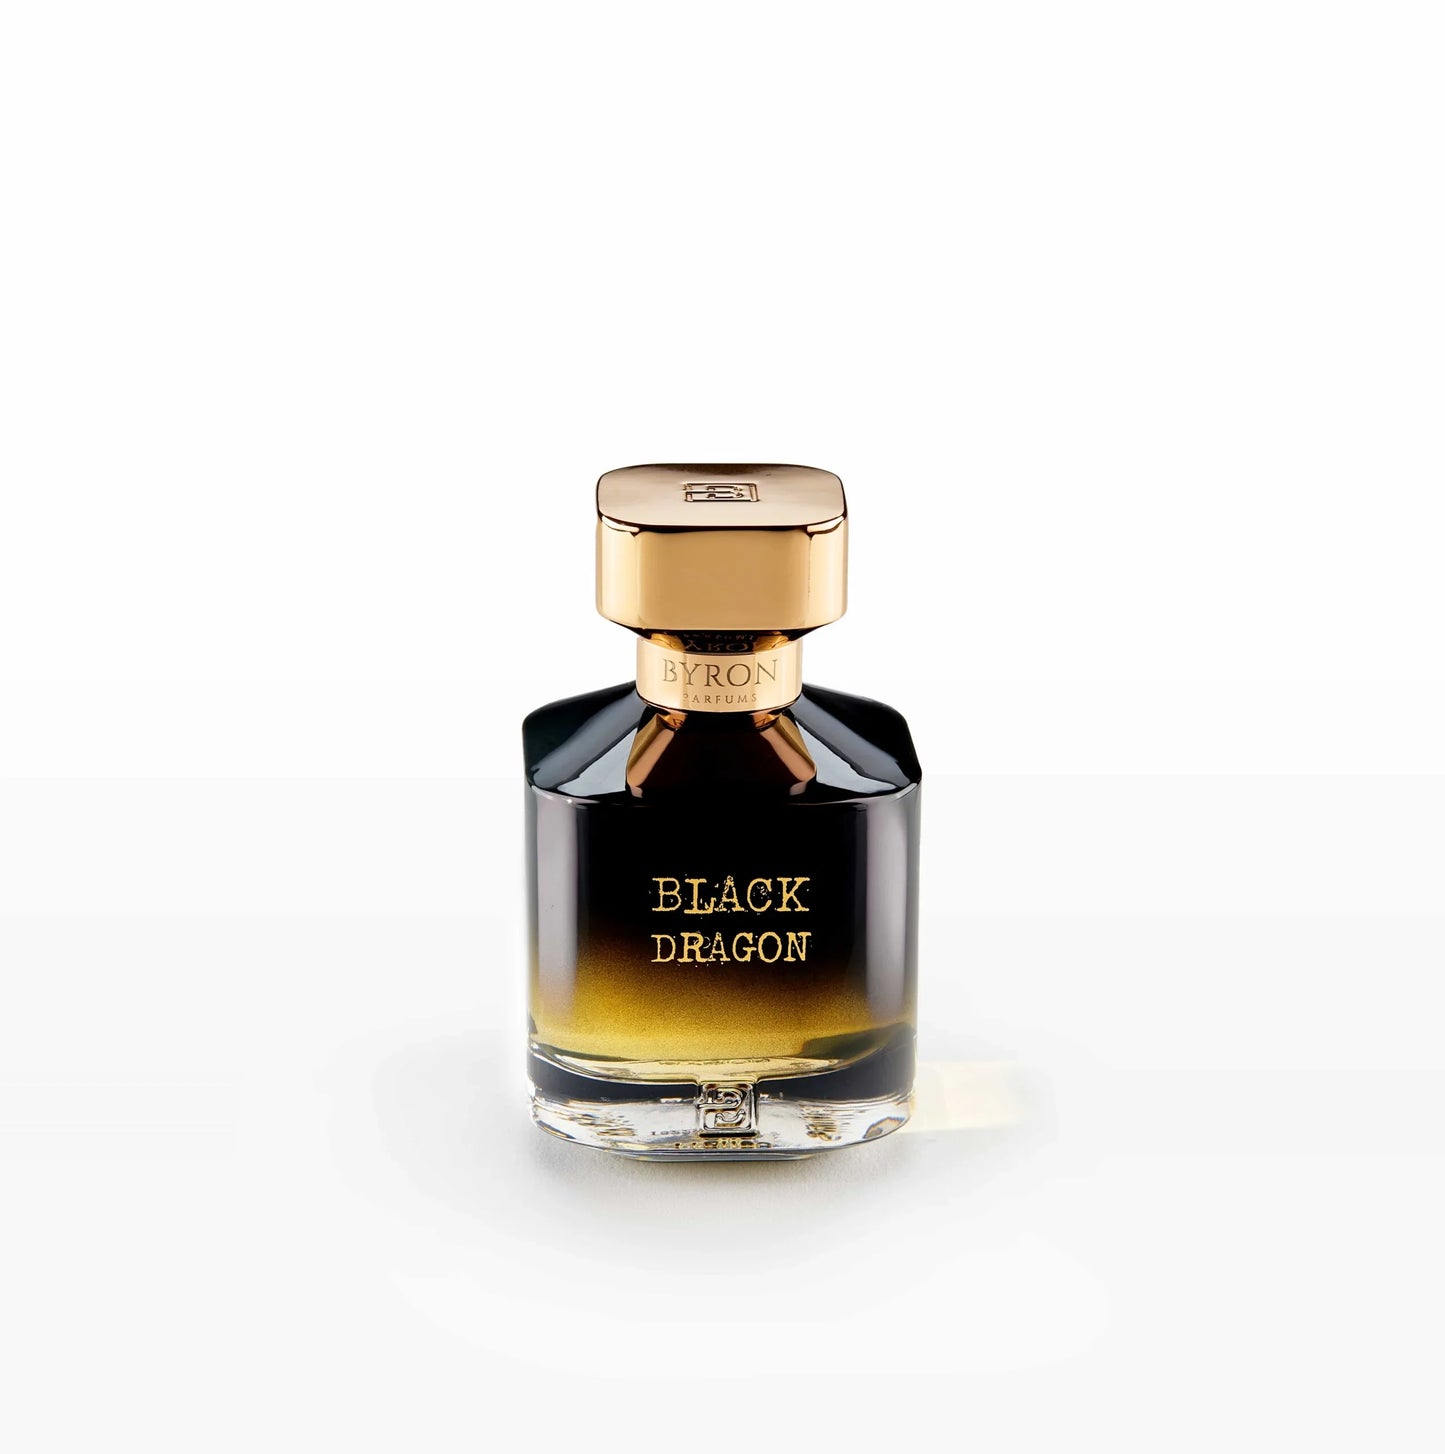 Black Dragon Byron Parfums